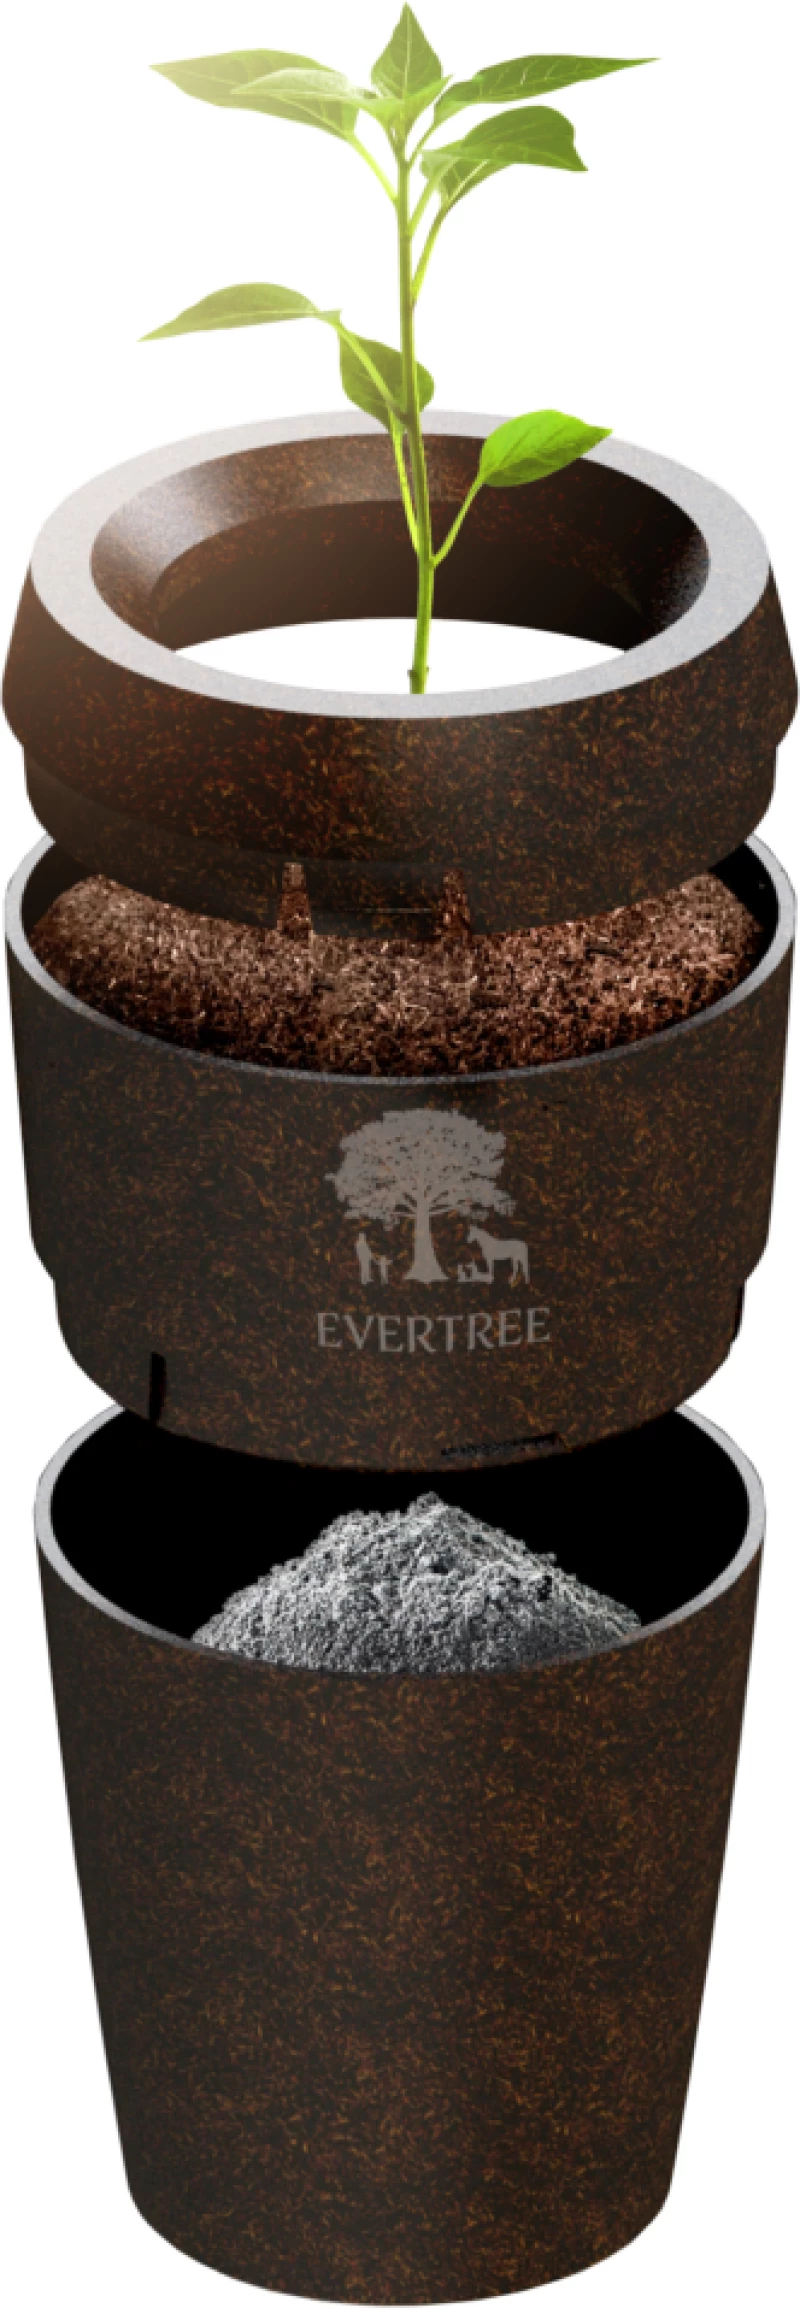 Evertree urn parts